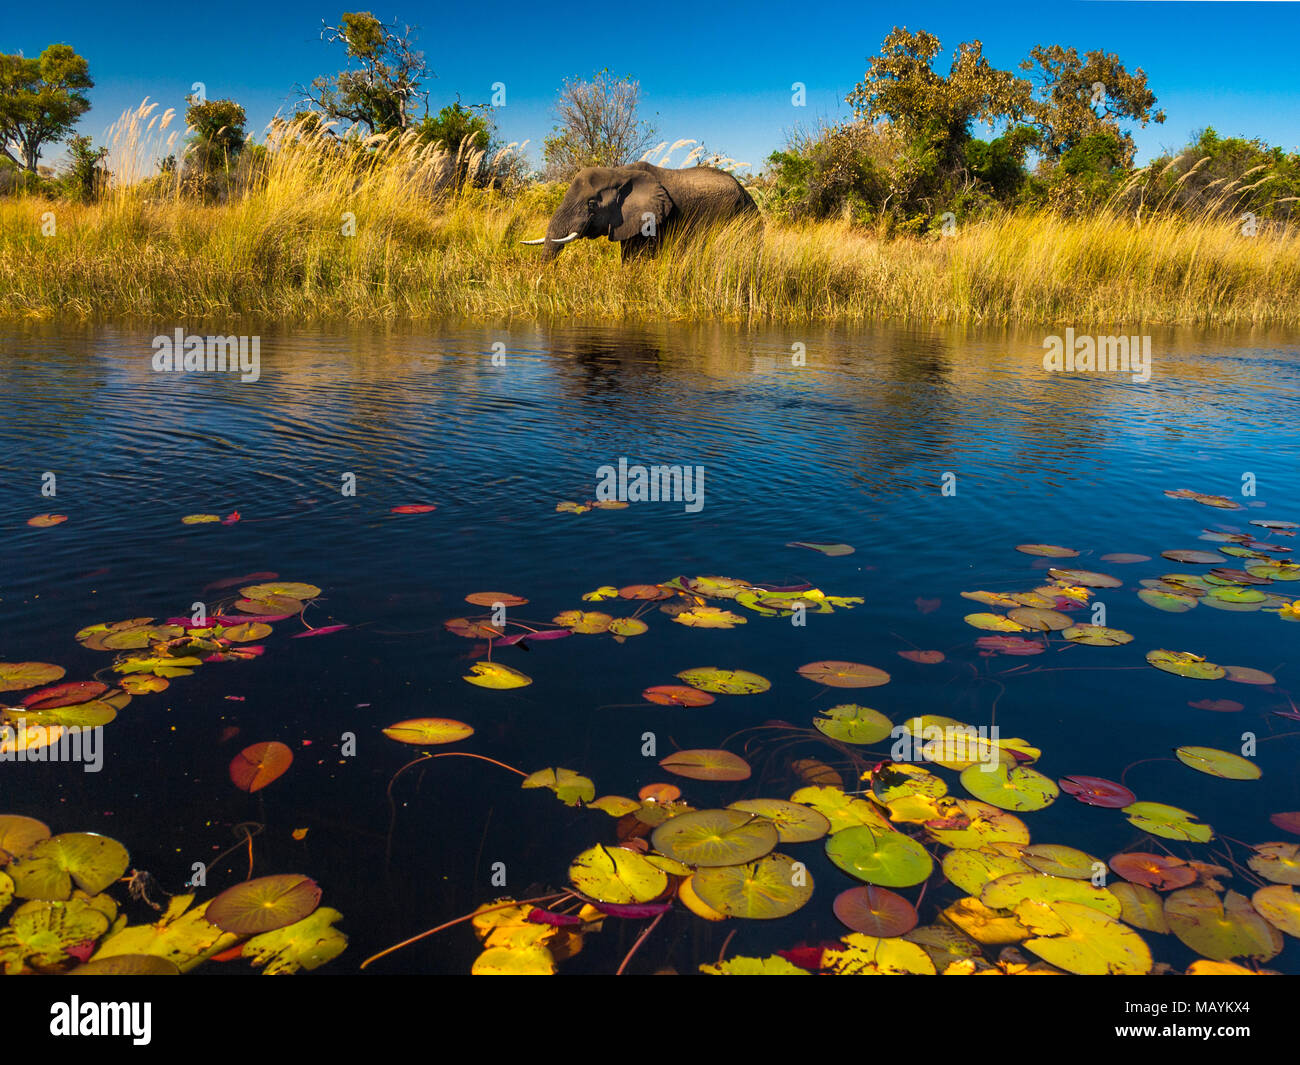 Elephant in the river Okavango delta, Botswana, Africa Stock Photo